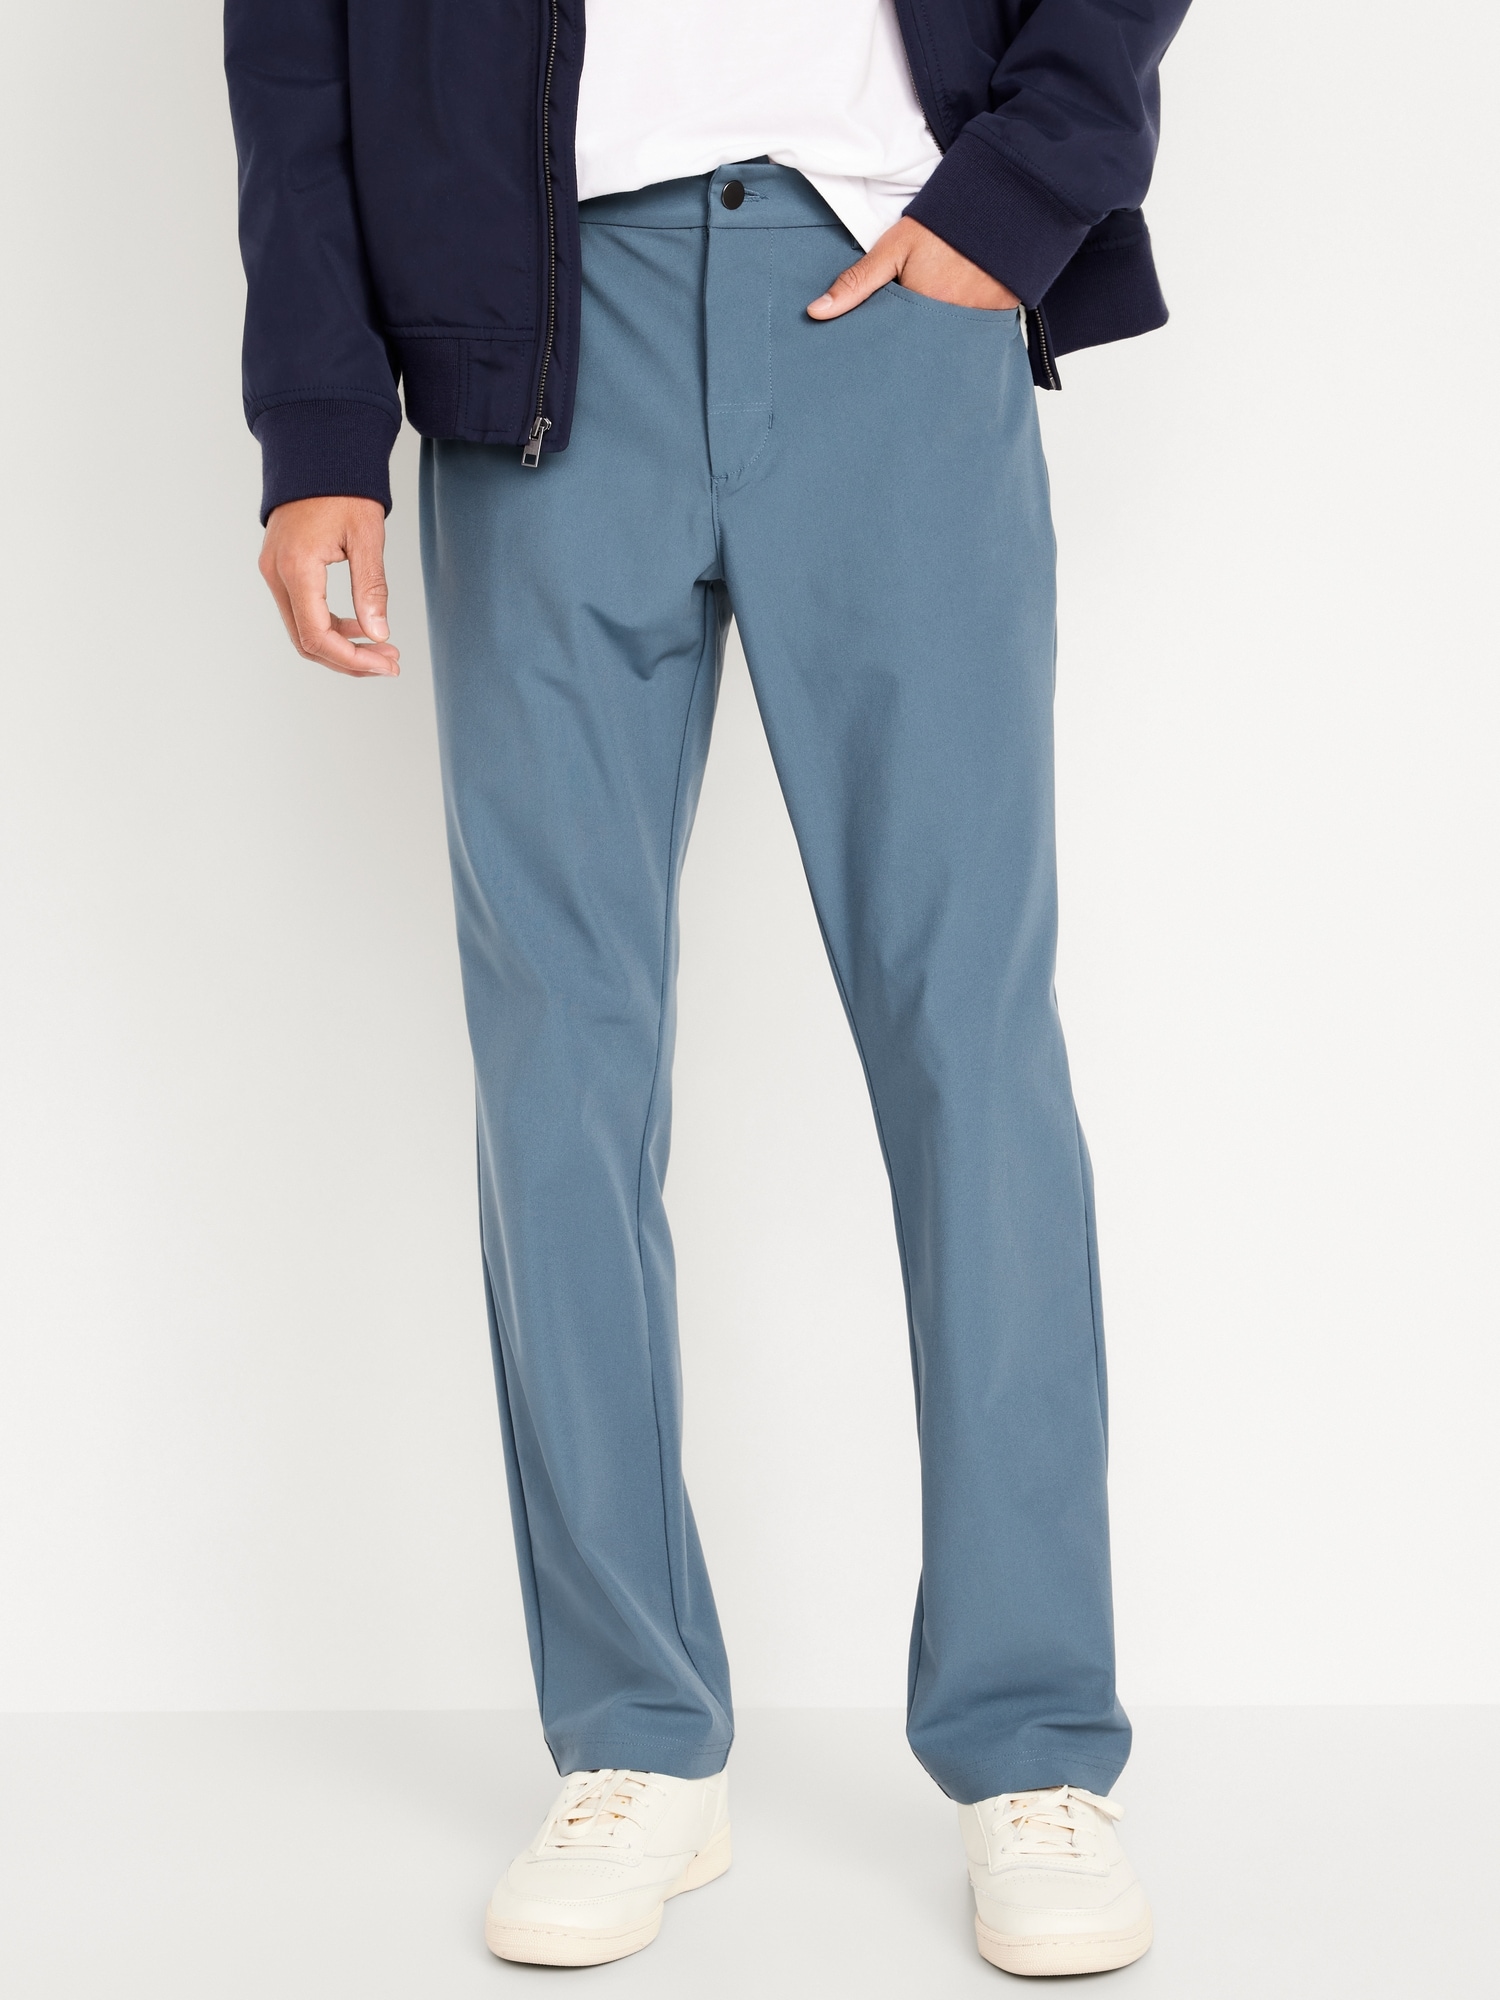 Dickies mens Slim Straight Fit Work casual pants, Dark Navy, 30W x 30L US :  : Clothing, Shoes & Accessories